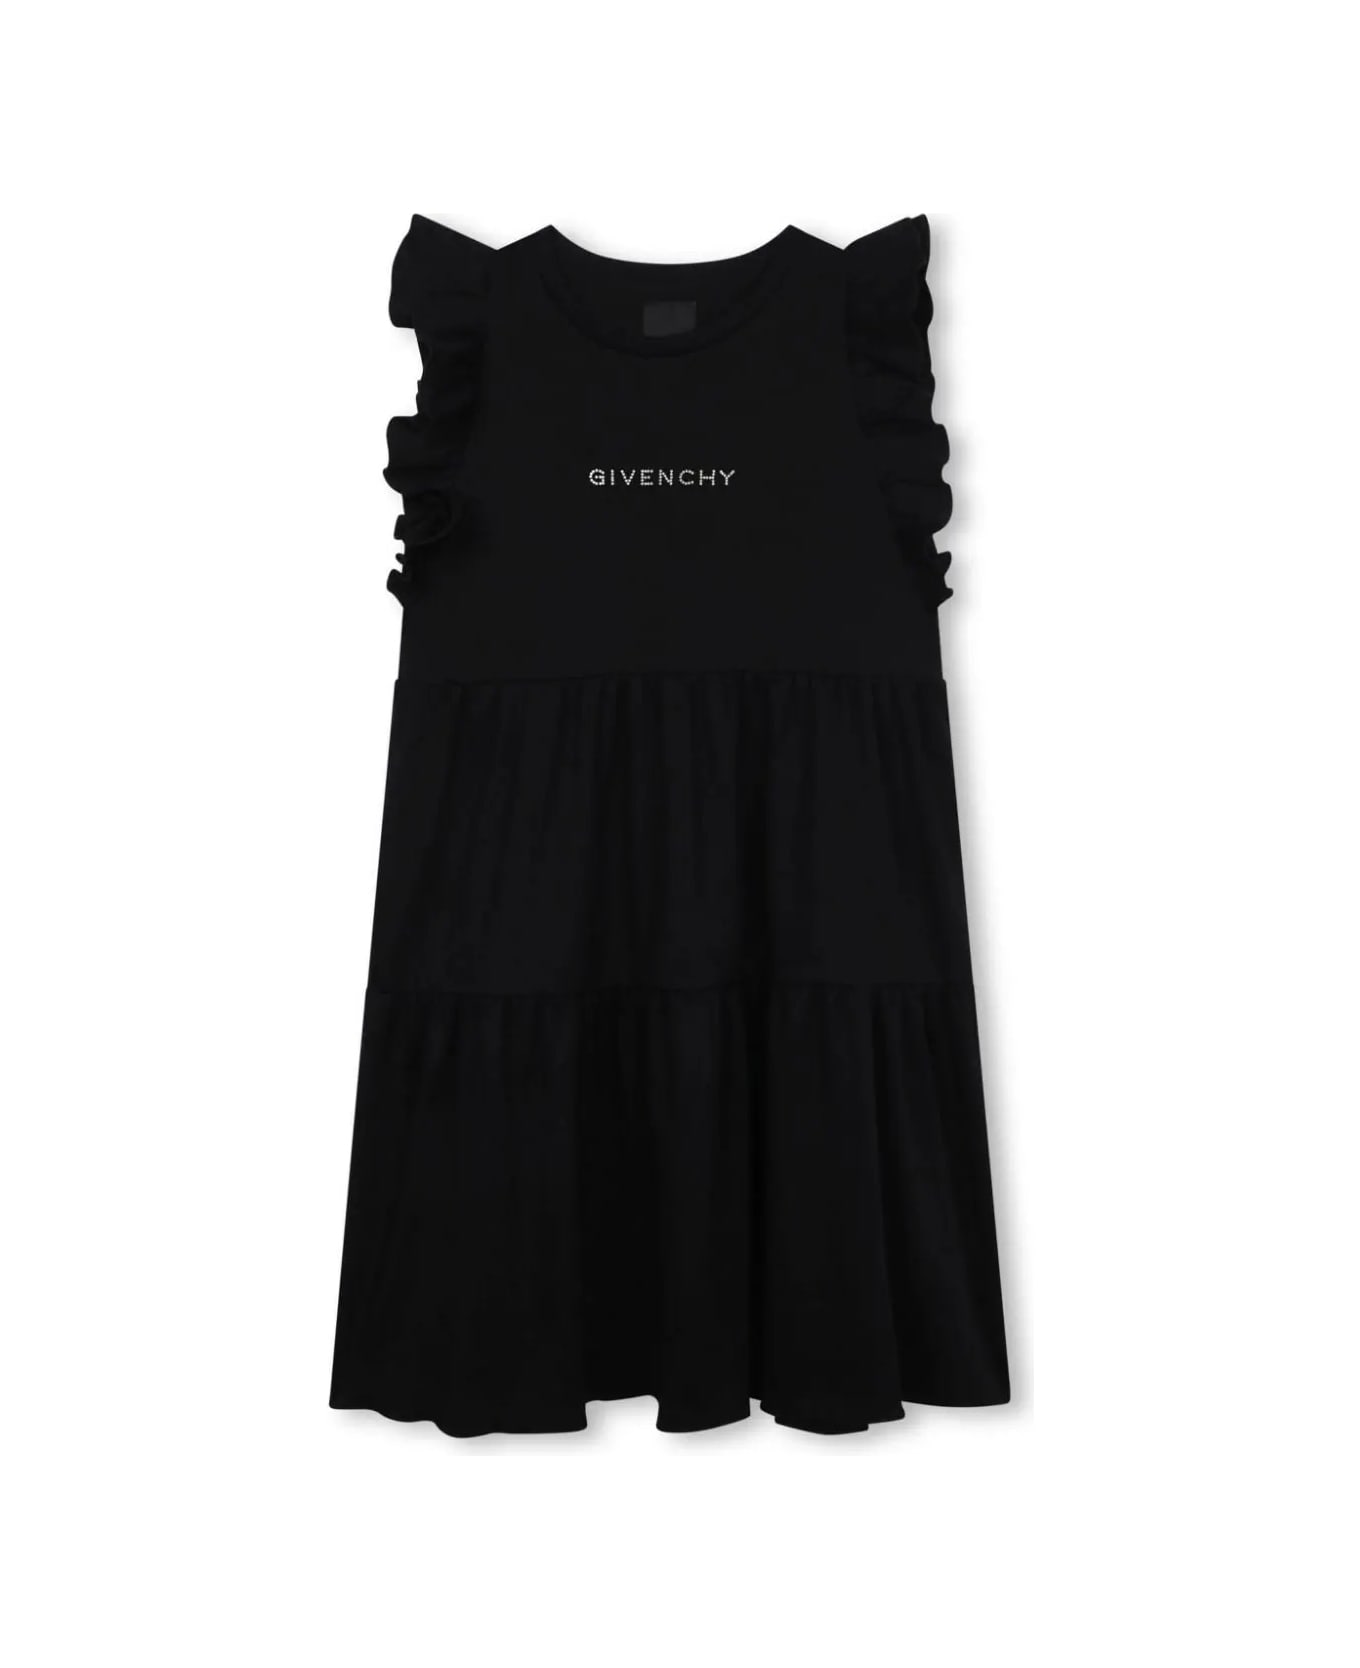 Givenchy Black grey Dress With Rhinestone Logo - Black